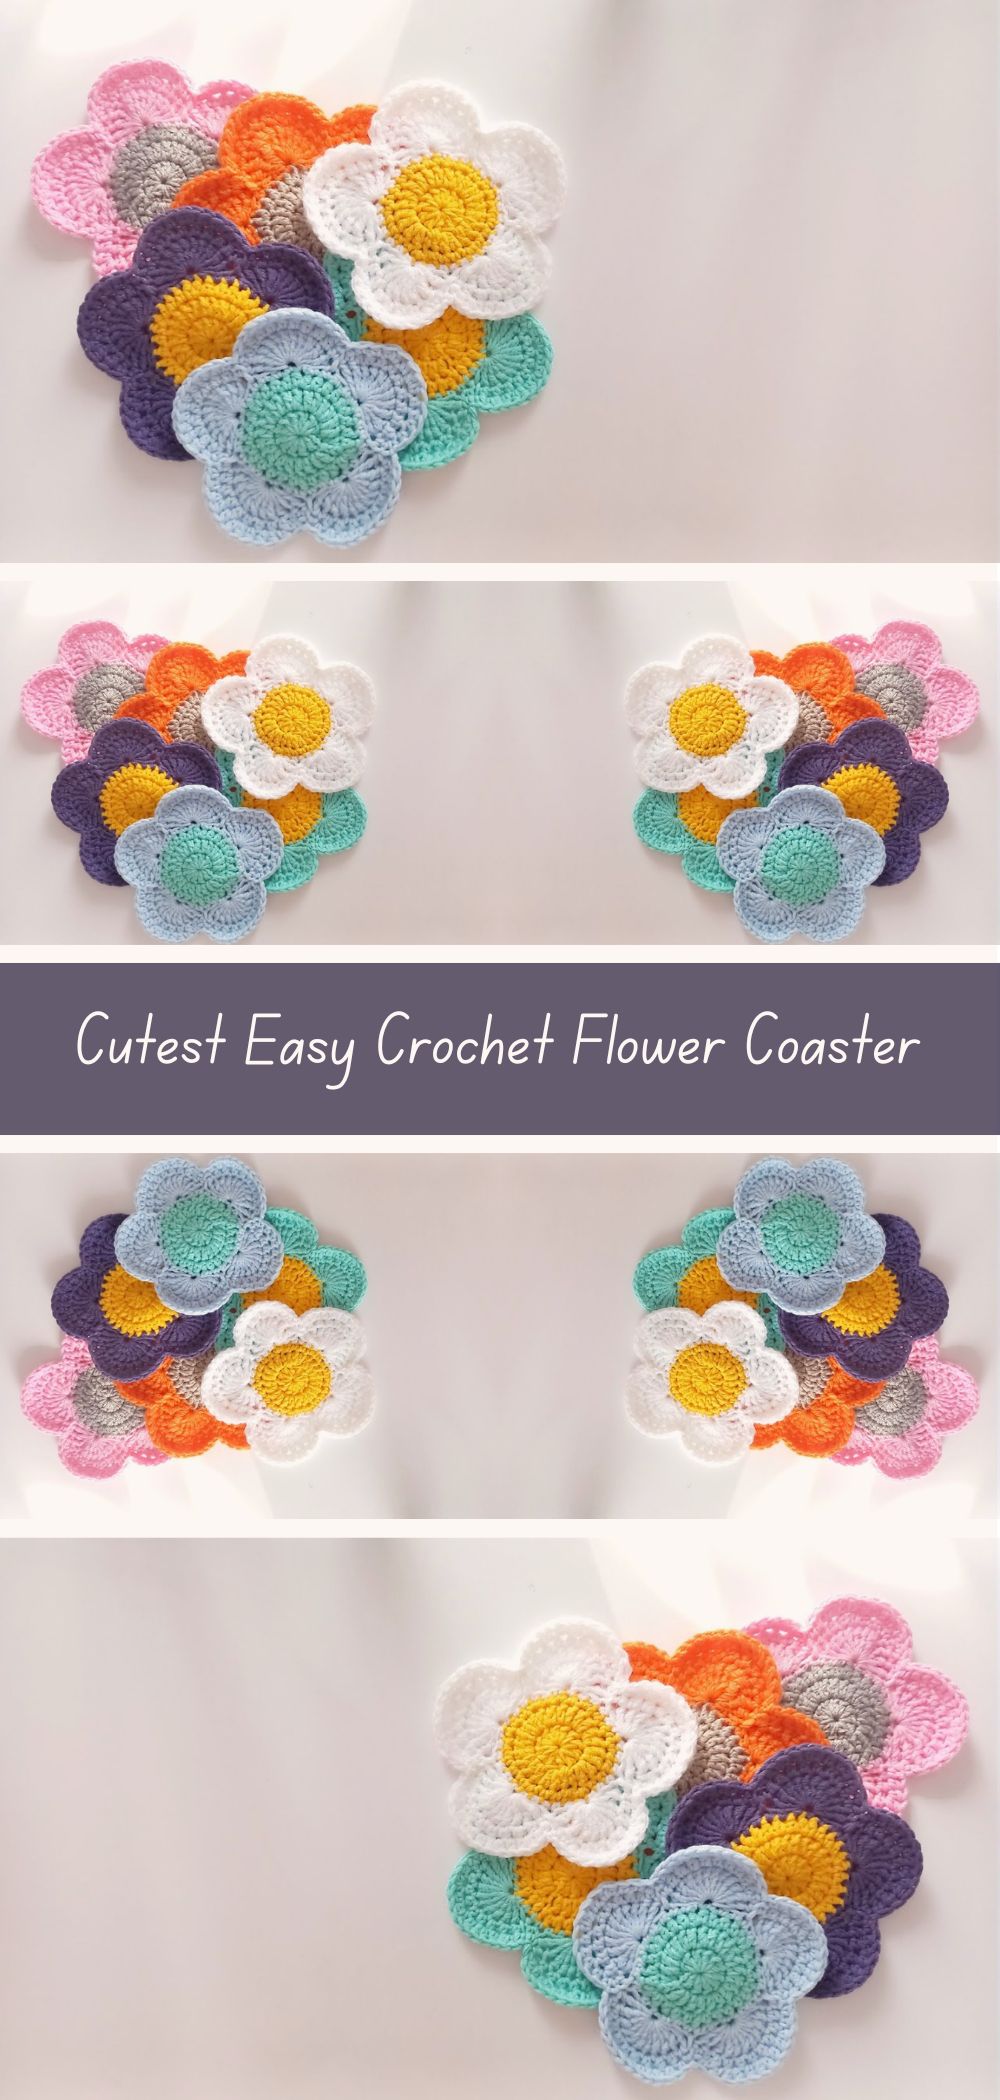 Free Pattern: Sweet Crochet Coaster Design - Create elegant coasters with this free crochet pattern